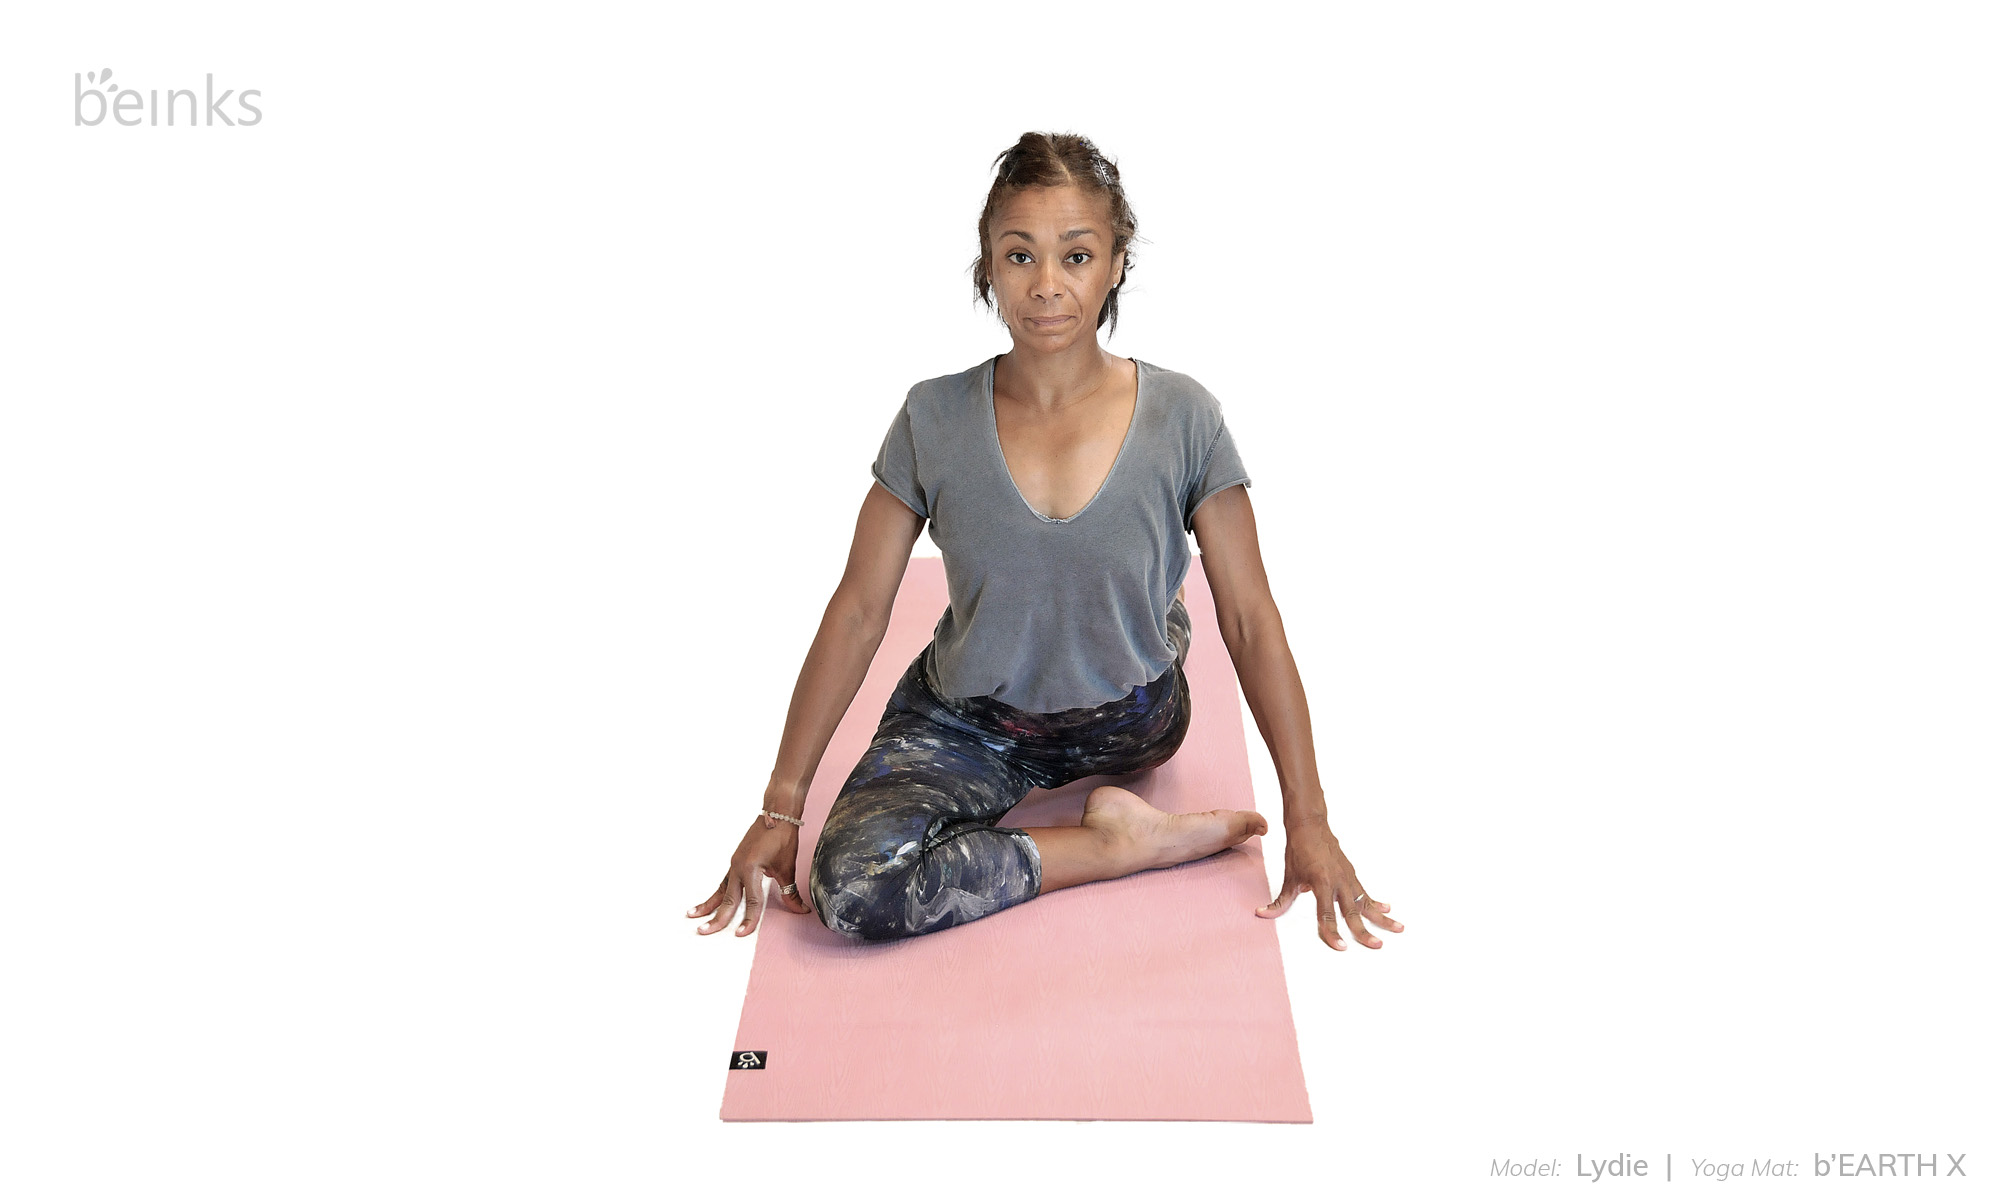 Yoga Poses for Beginners to Advanced Yogis - Gym Geek